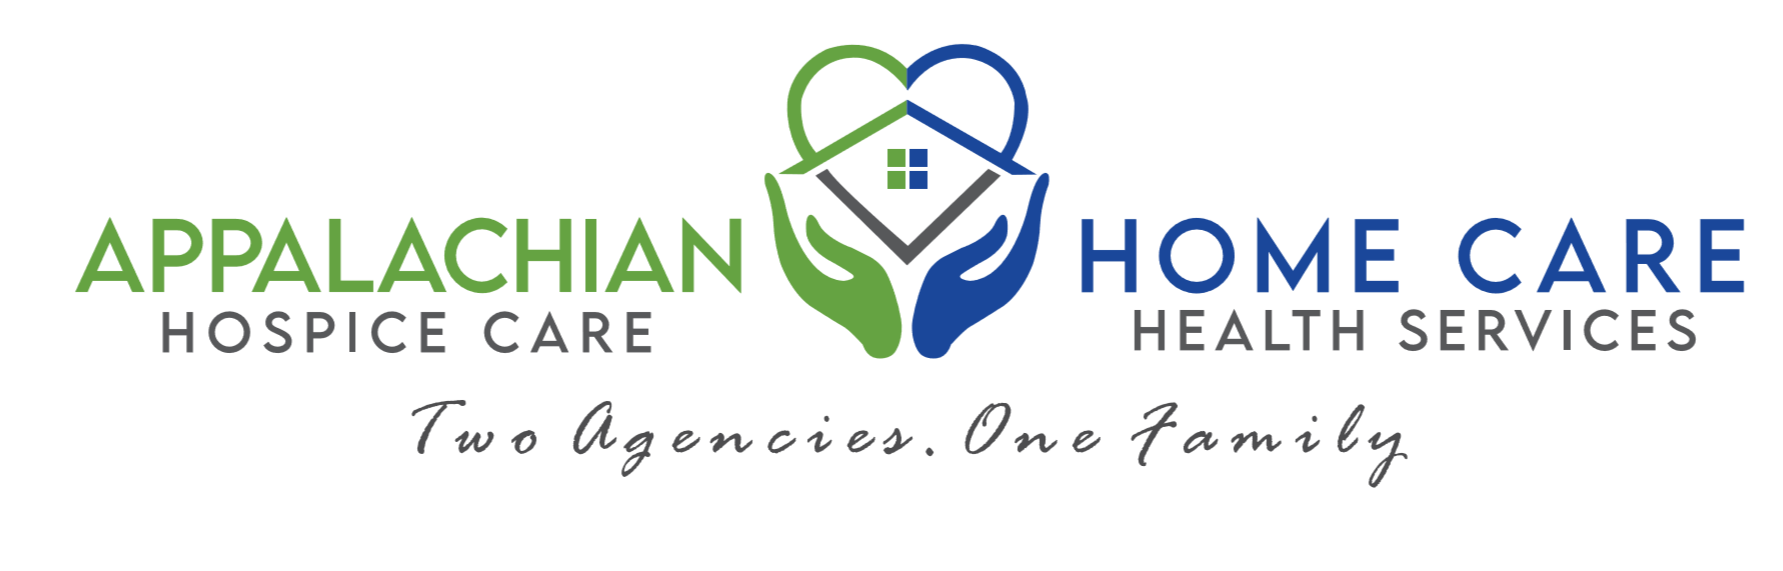 Appalachian Hospice & Home Care Services